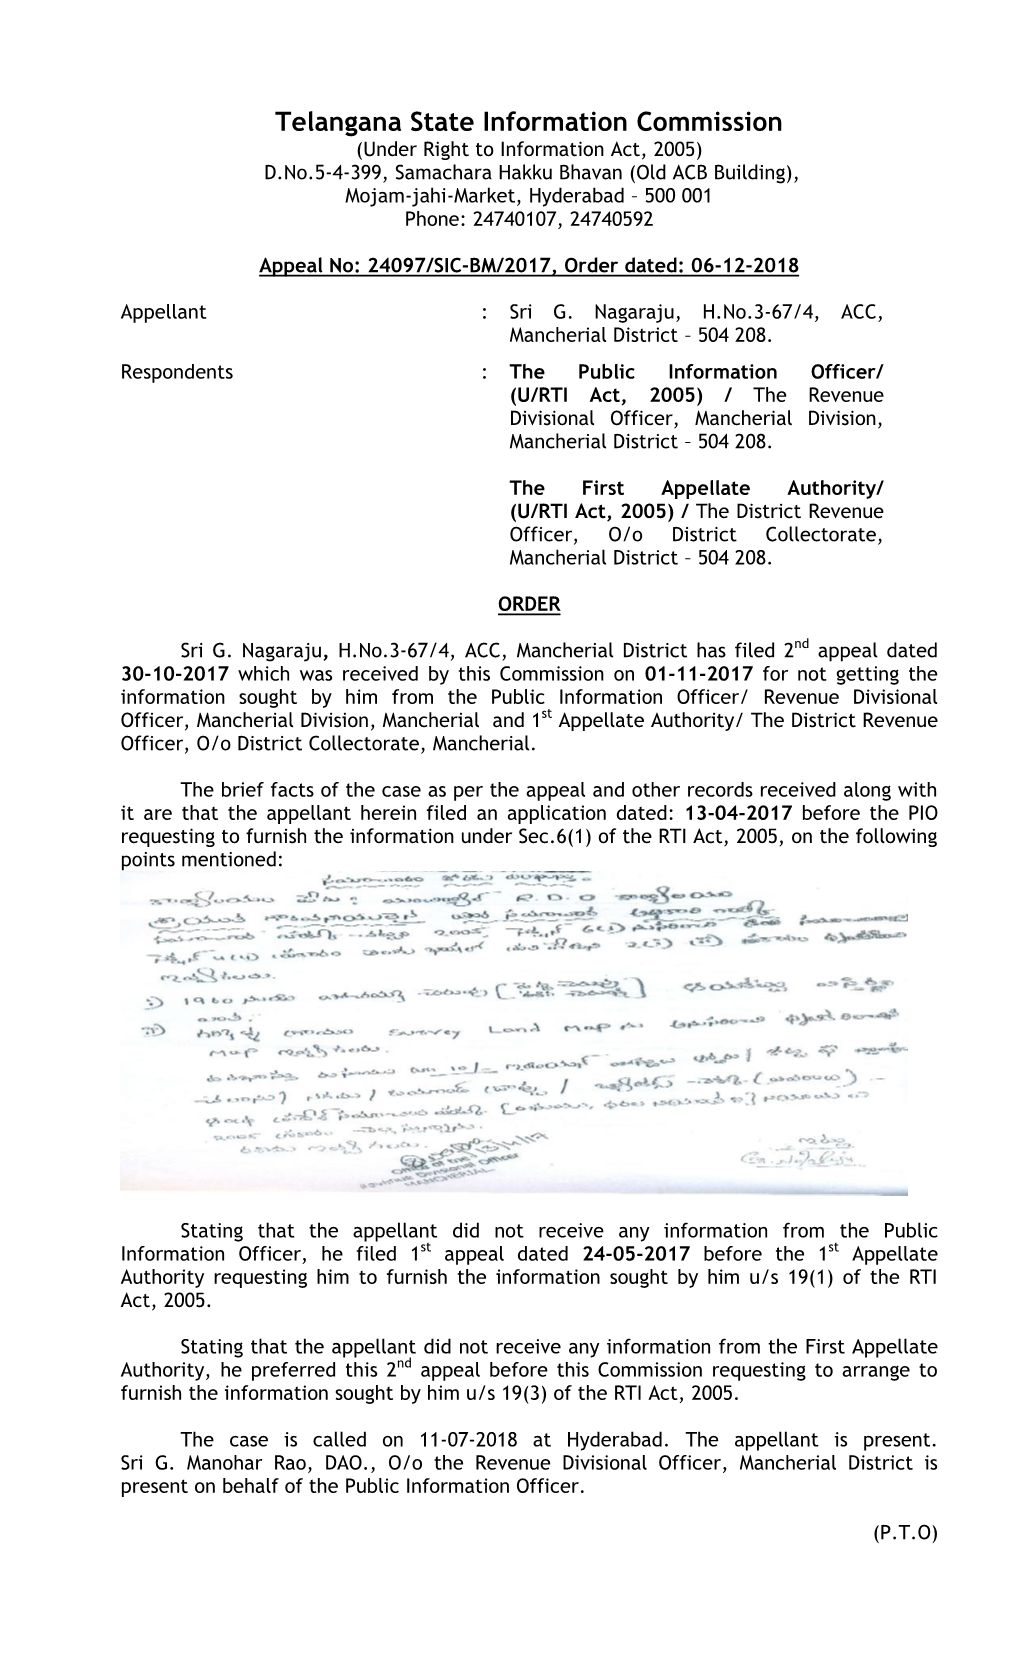 Under Right to Information Act, 2005) D.No.5-4-399, Samachara Hakku Bhavan (Old ACB Building), Mojam-Jahi-Market, Hyderabad – 500 001 Phone: 24740107, 24740592